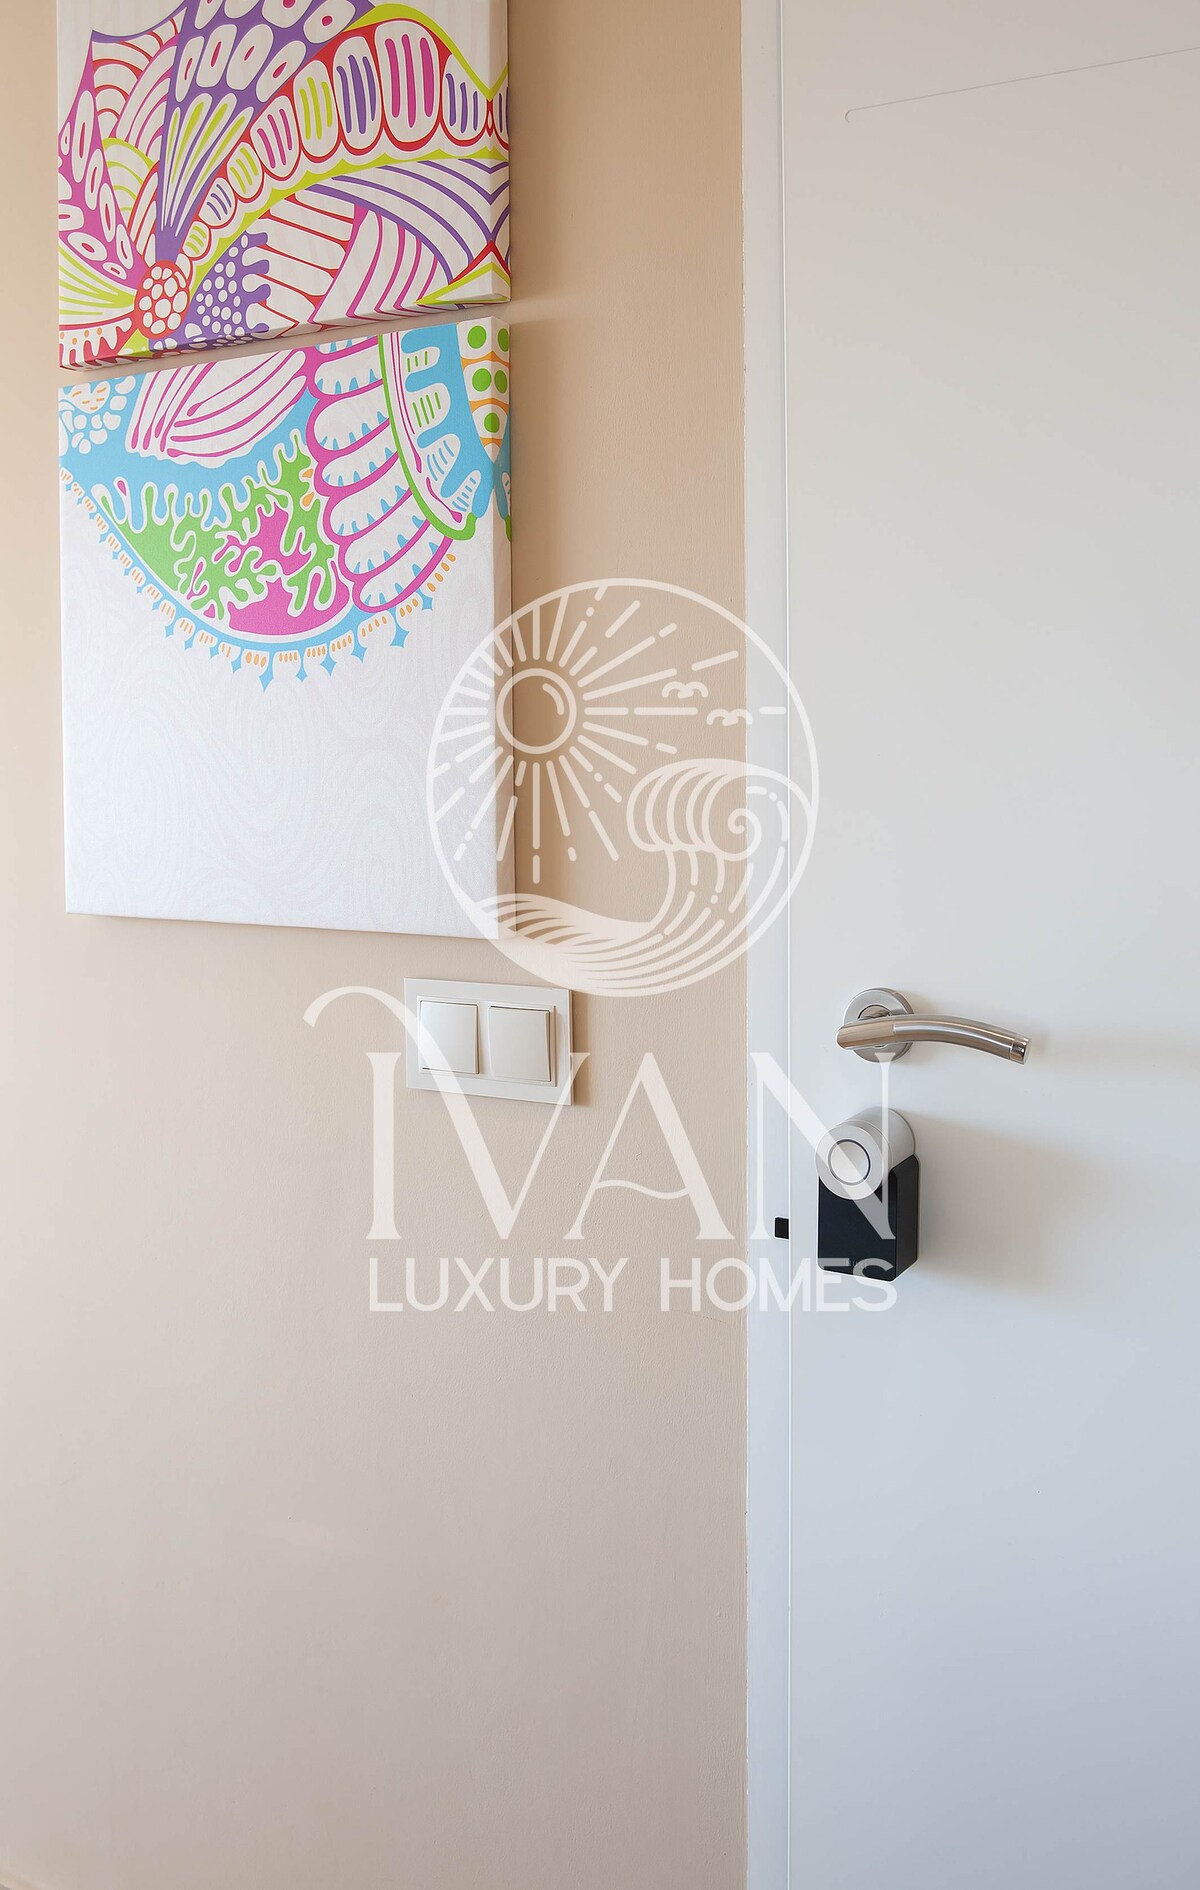 Casa Nala - Ivan Luxury Homes 6Ł Pta Norte 1ż Linea